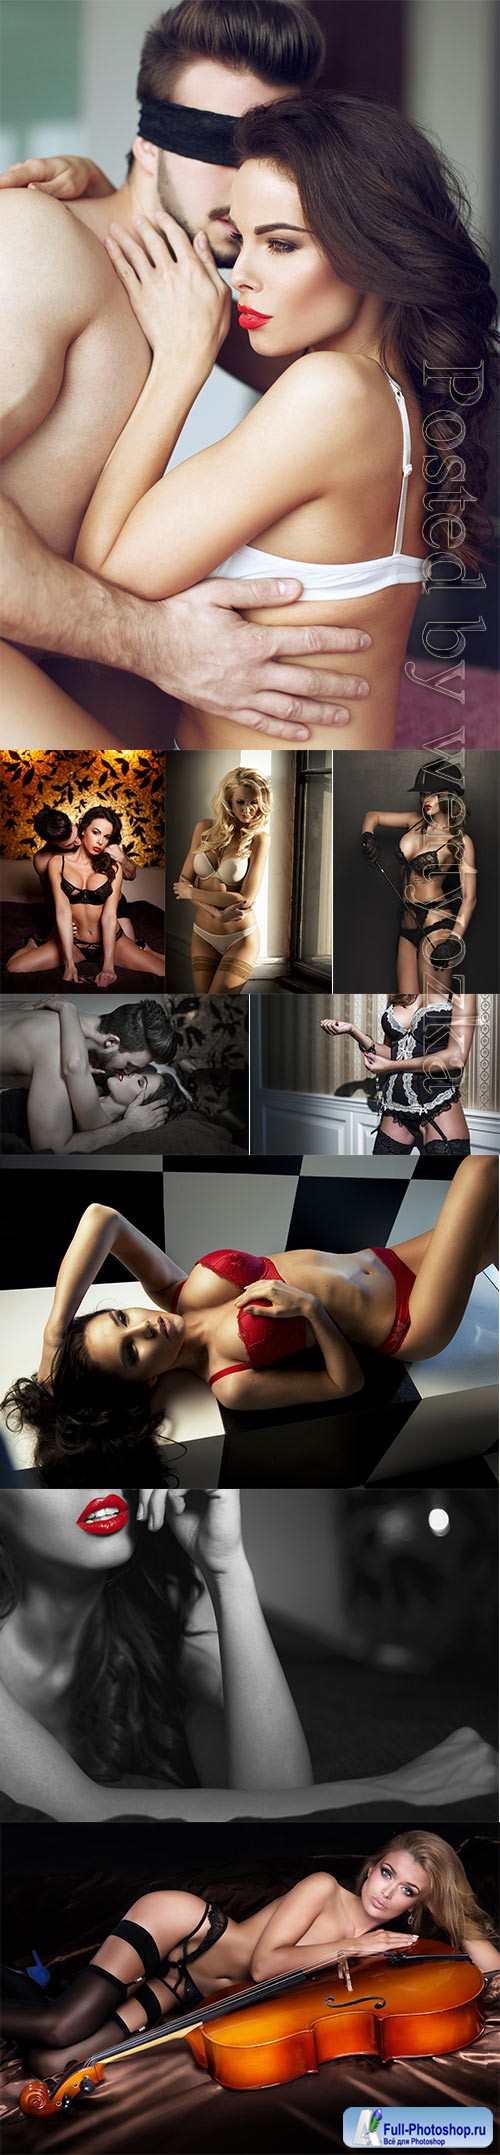 Luxury women in lingerie posing stock photo vol 16